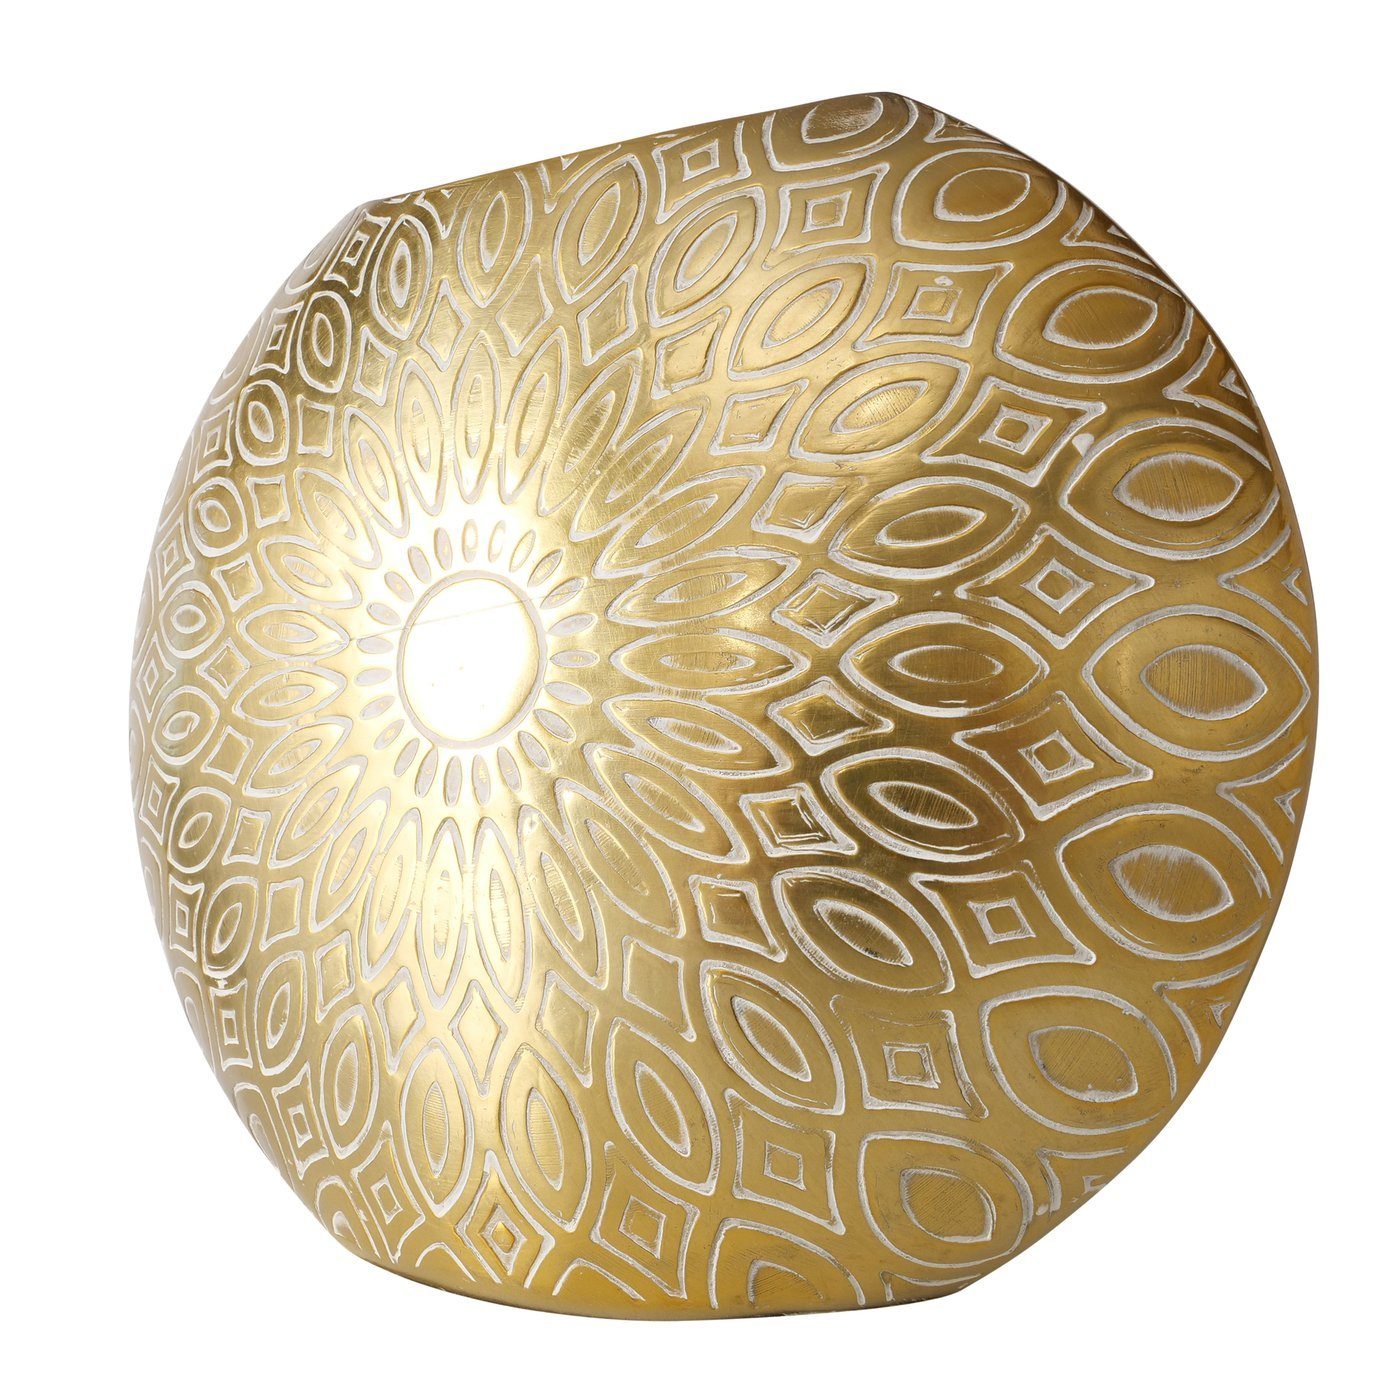 "Valenca" in aus gold, Dekovase Vase Aluminium Blumenvase BOLTZE